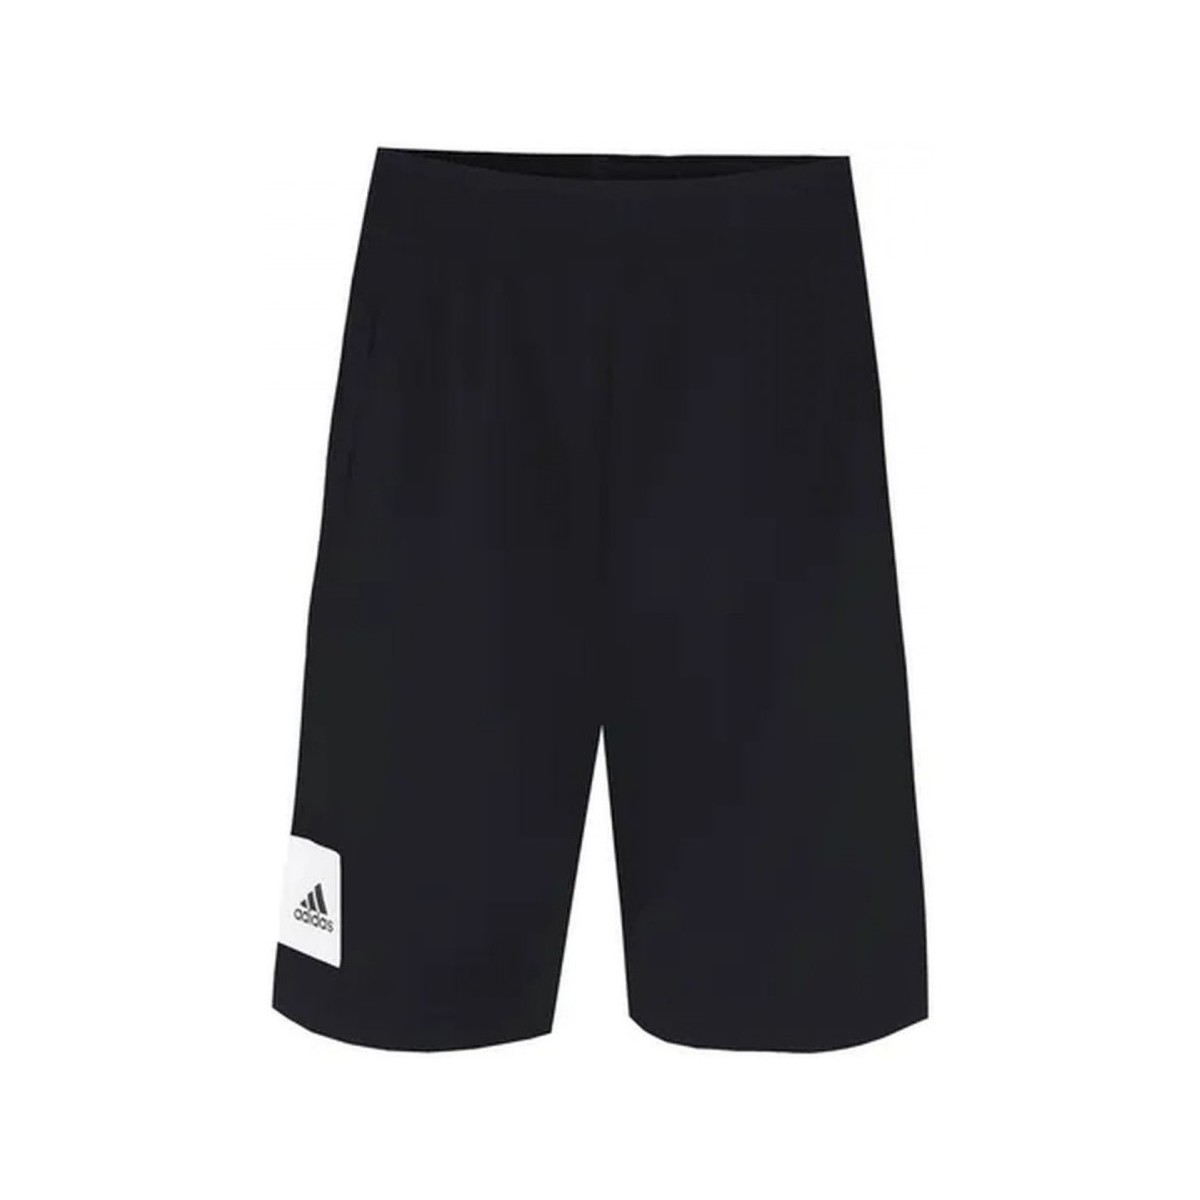 Textil Rapaz Shorts / Bermudas adidas Originals Jb Tr Aero Sh Preto